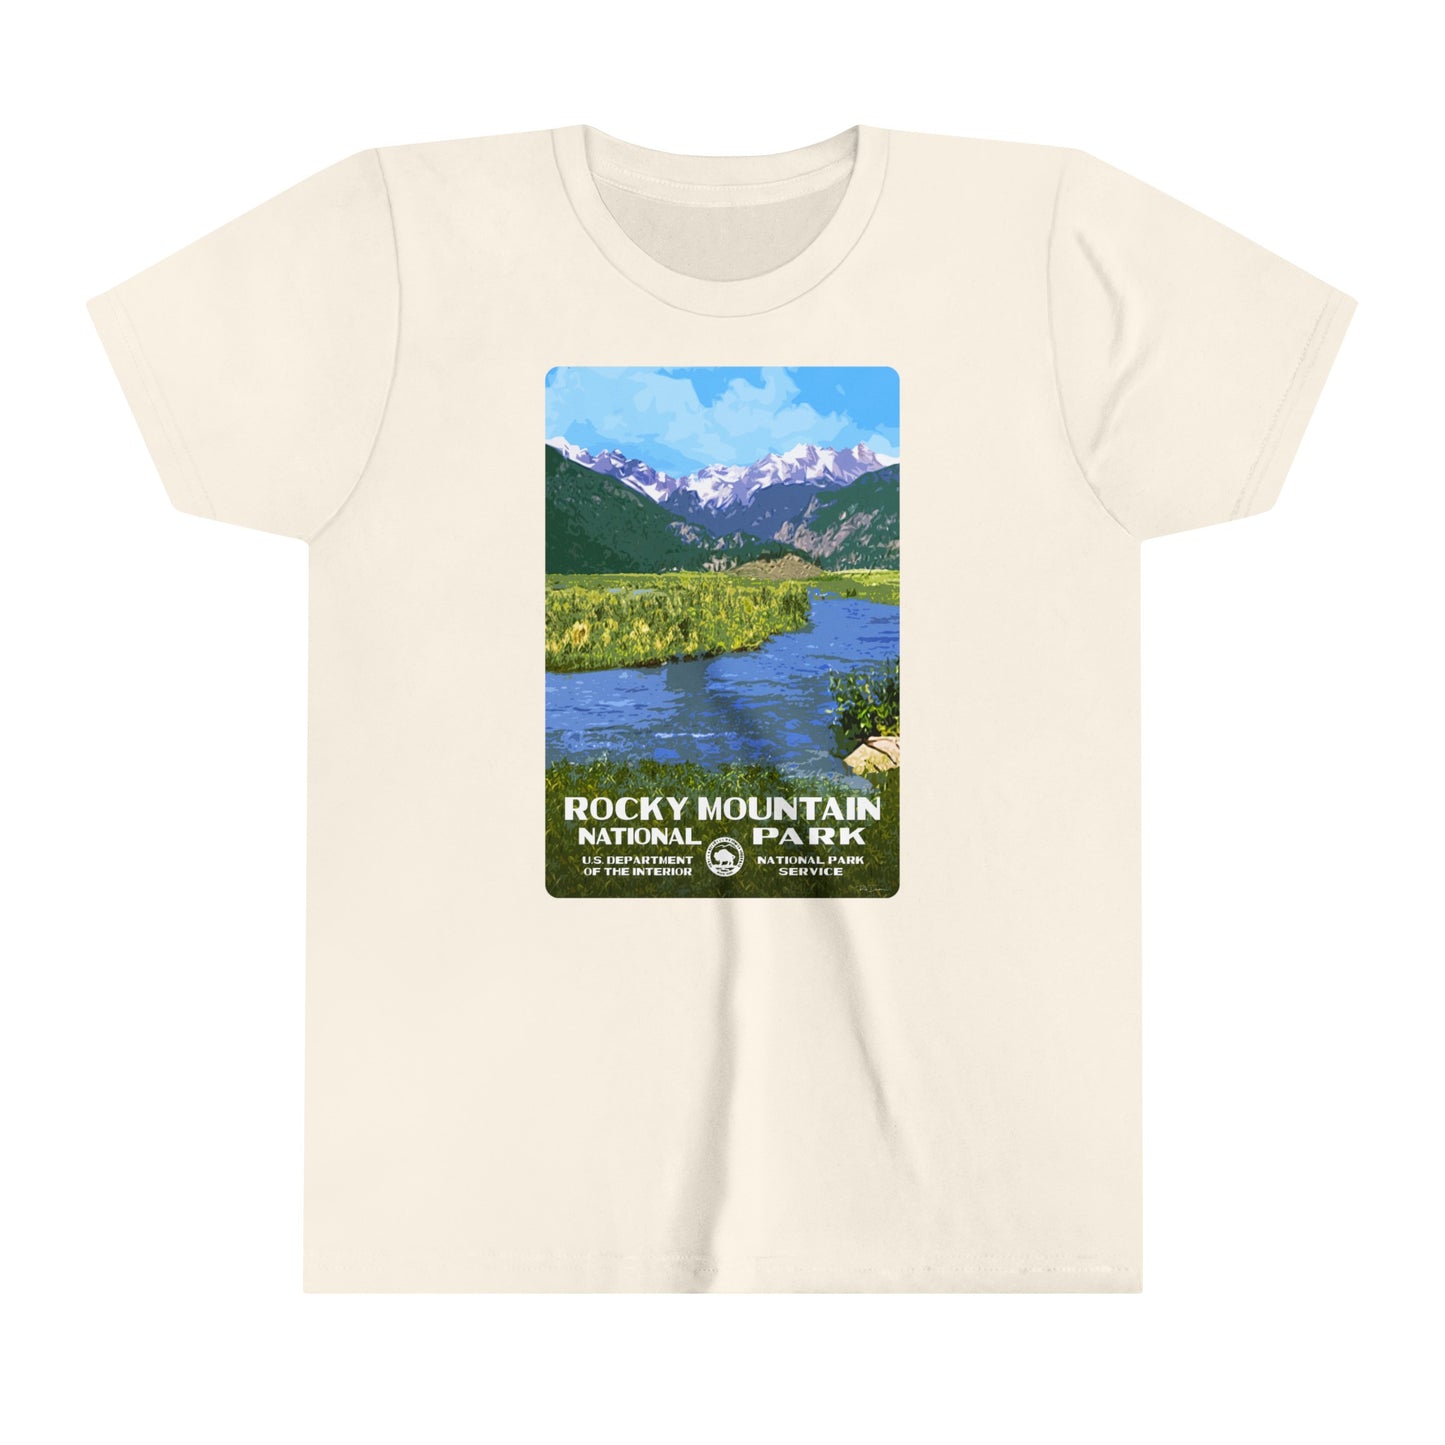 Rocky Mountain National Park (Moraine Park) Kids' T-Shirt